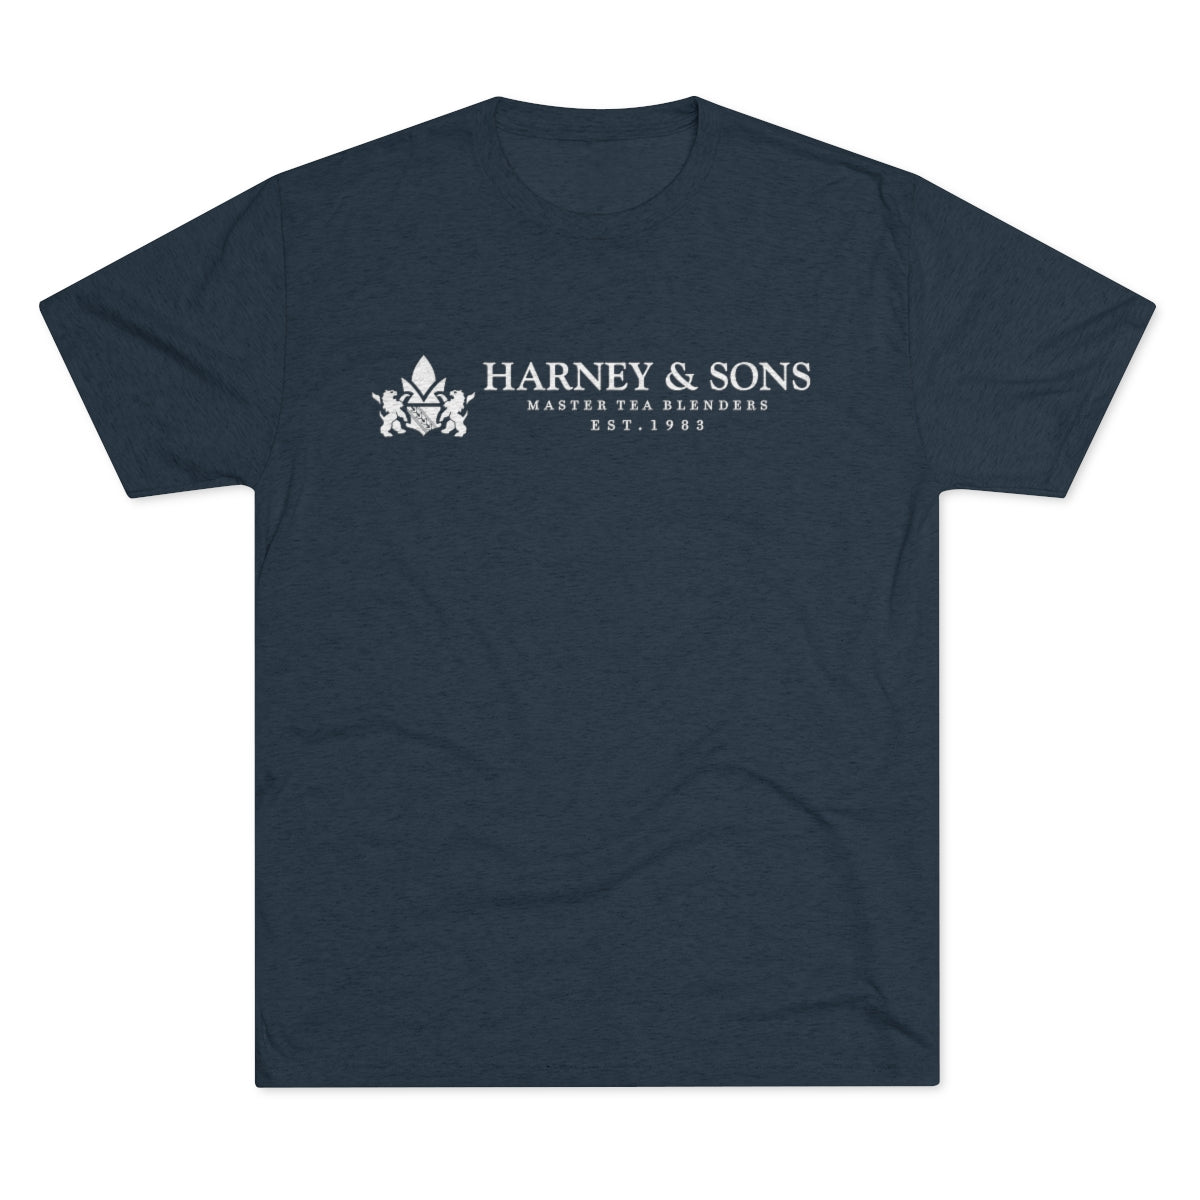 Harney & Sons - Est. 1983 Graphic Tee - Tri-Blend Vintage Navy L - Harney & Sons Fine Teas